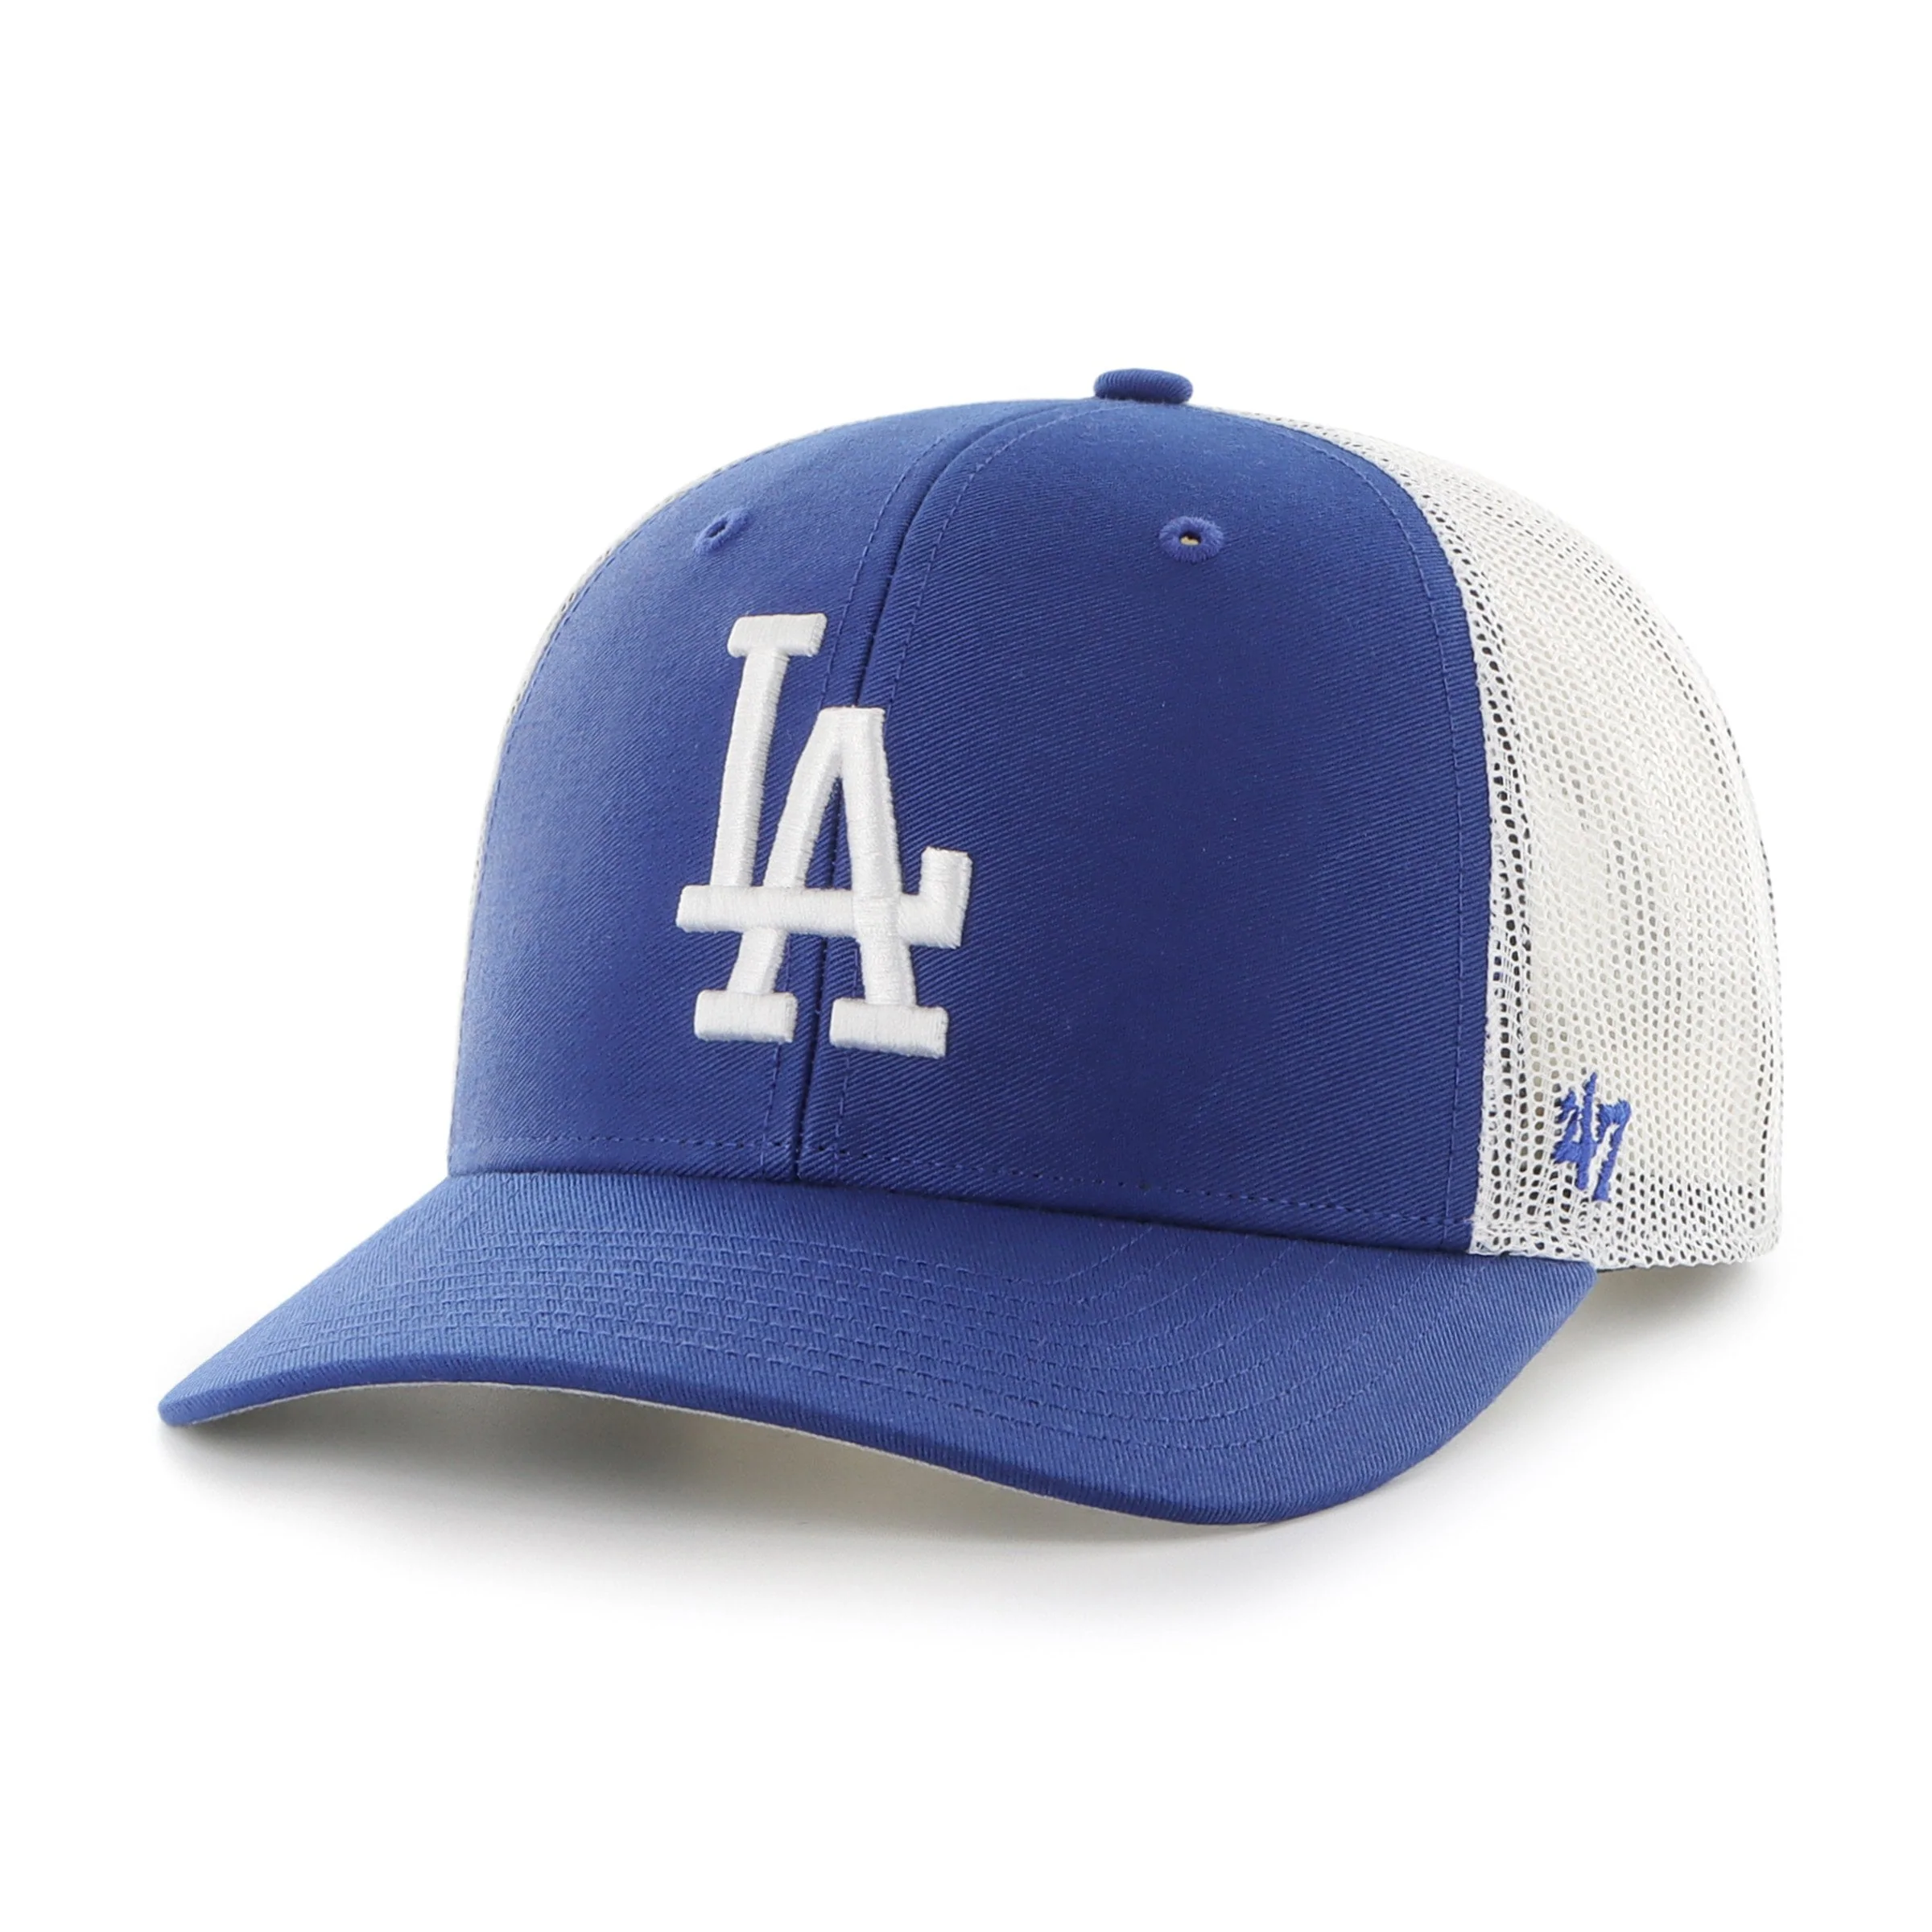 Gorra La Dodgers 47 Brand Snapback World Series Tiffany Blue